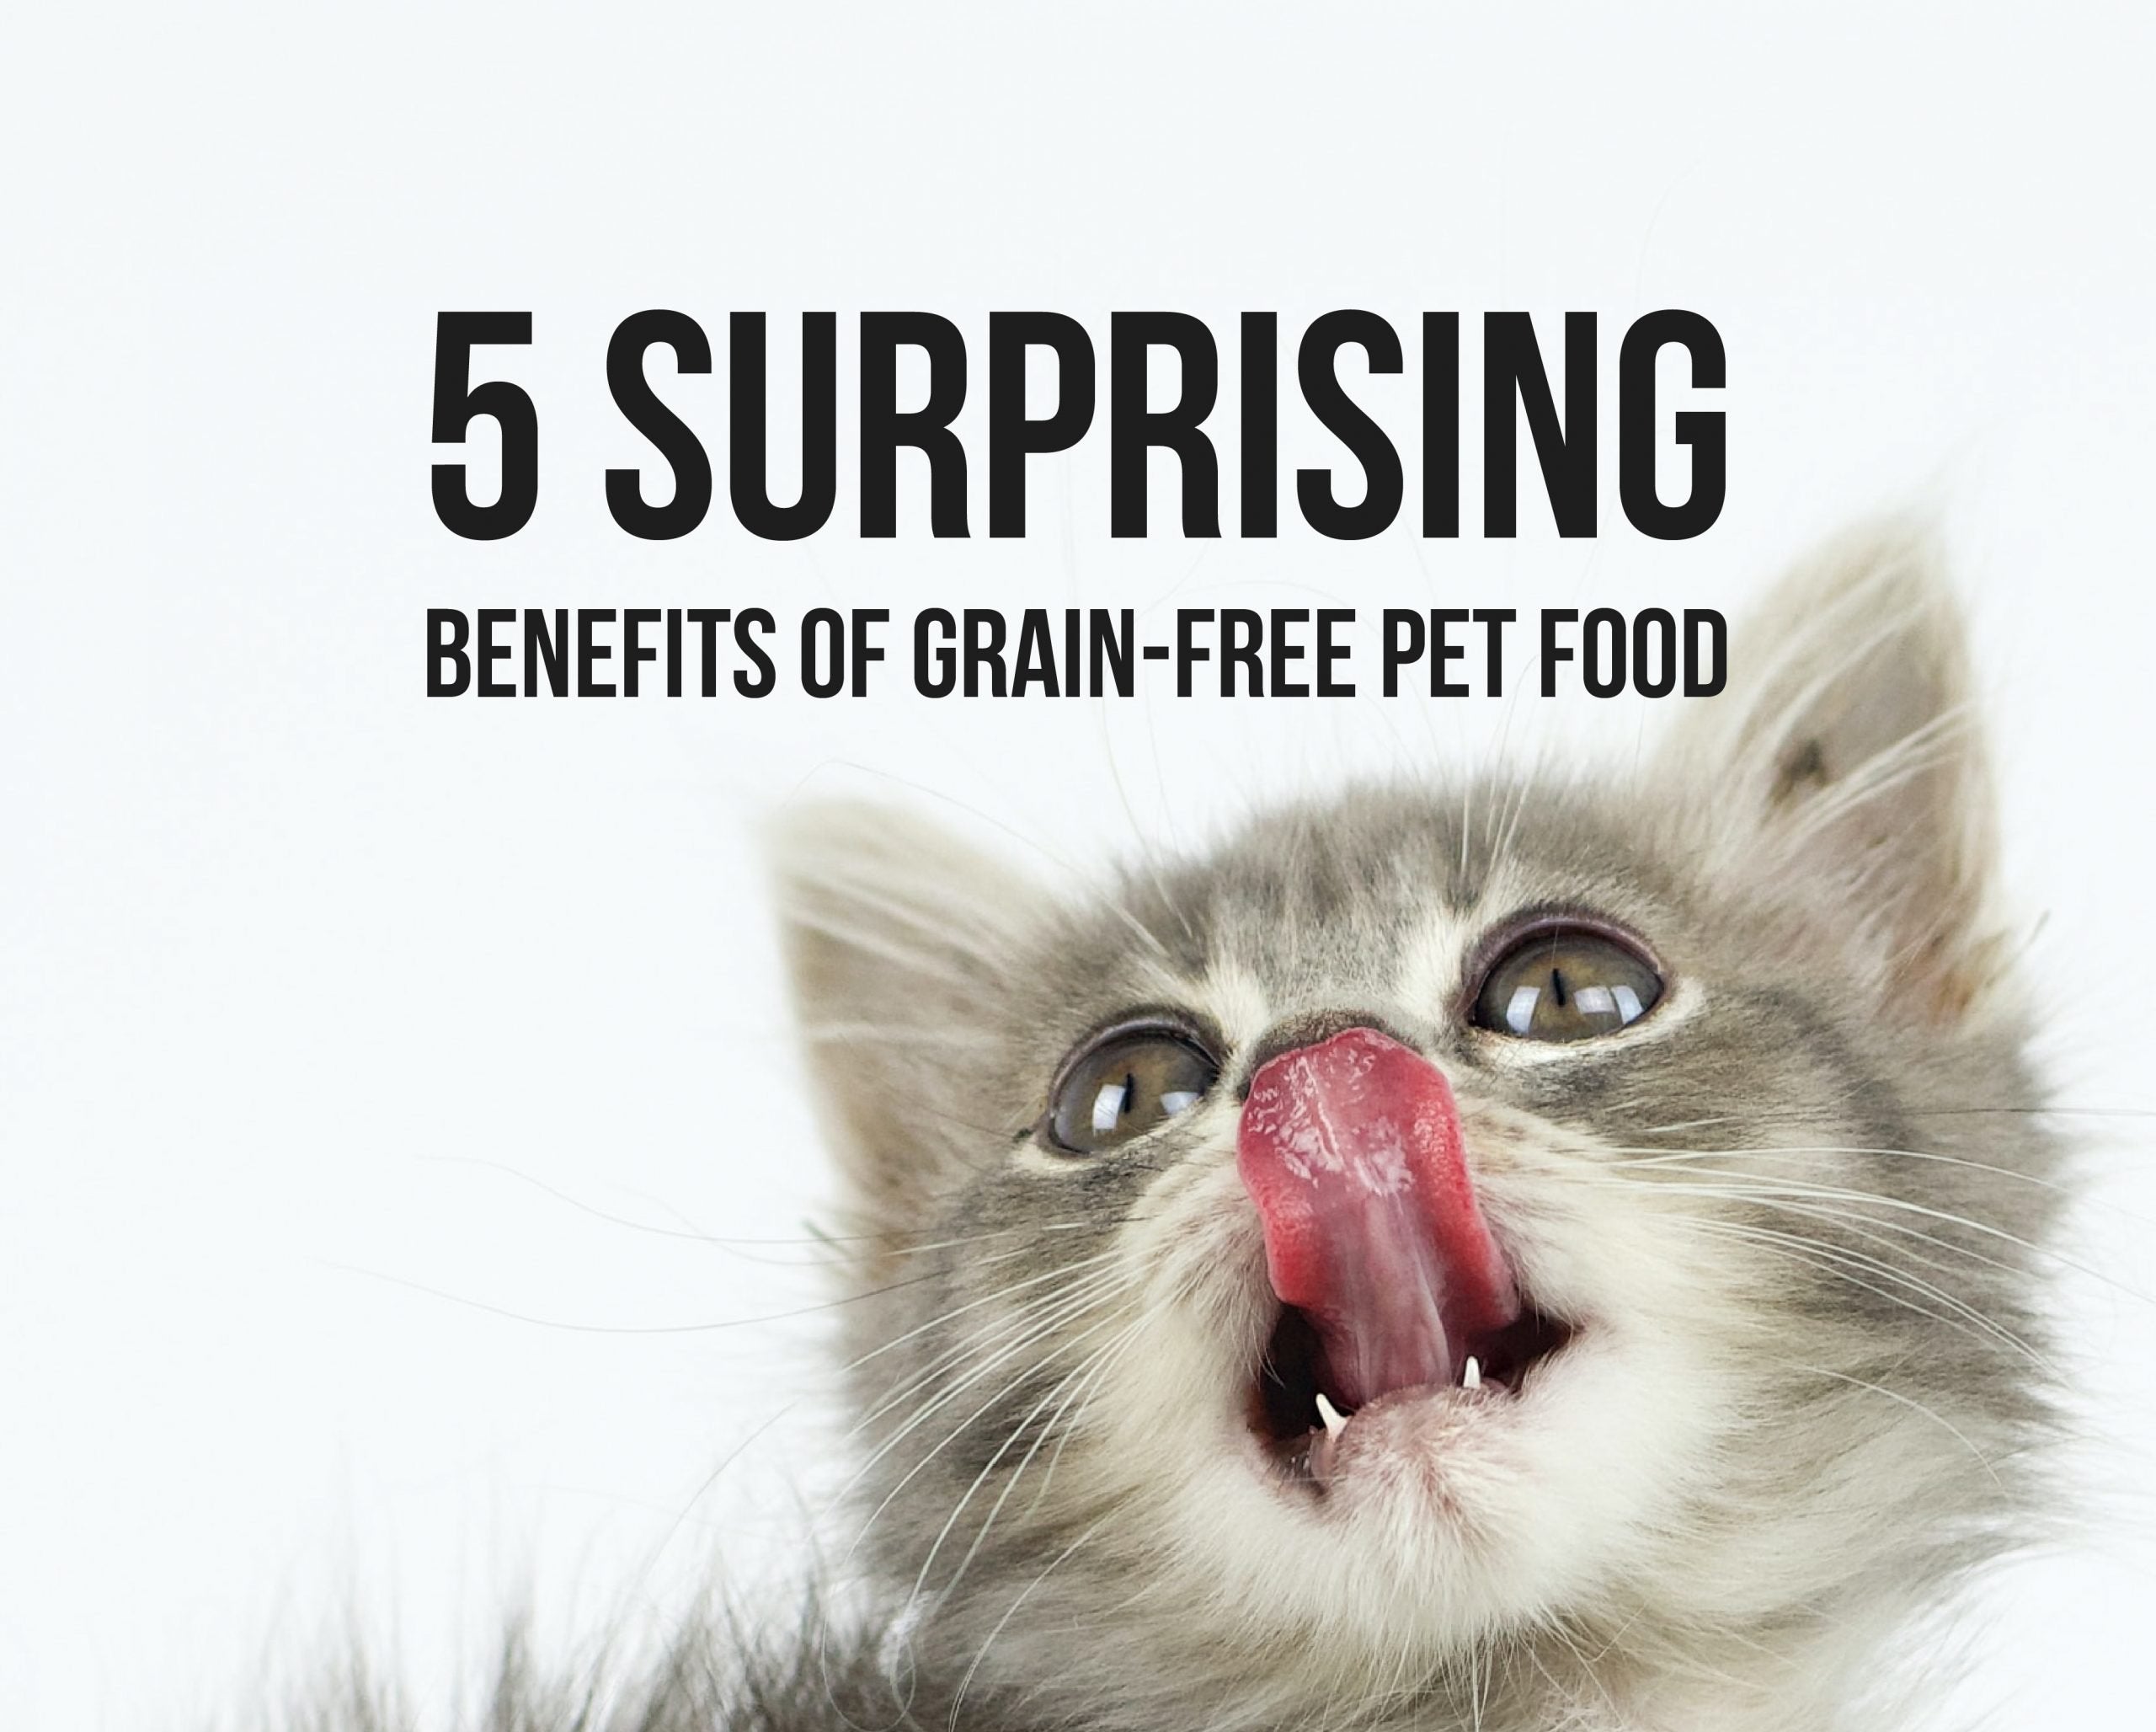 5 Surprising Benefits of Grain-Free Pet Food